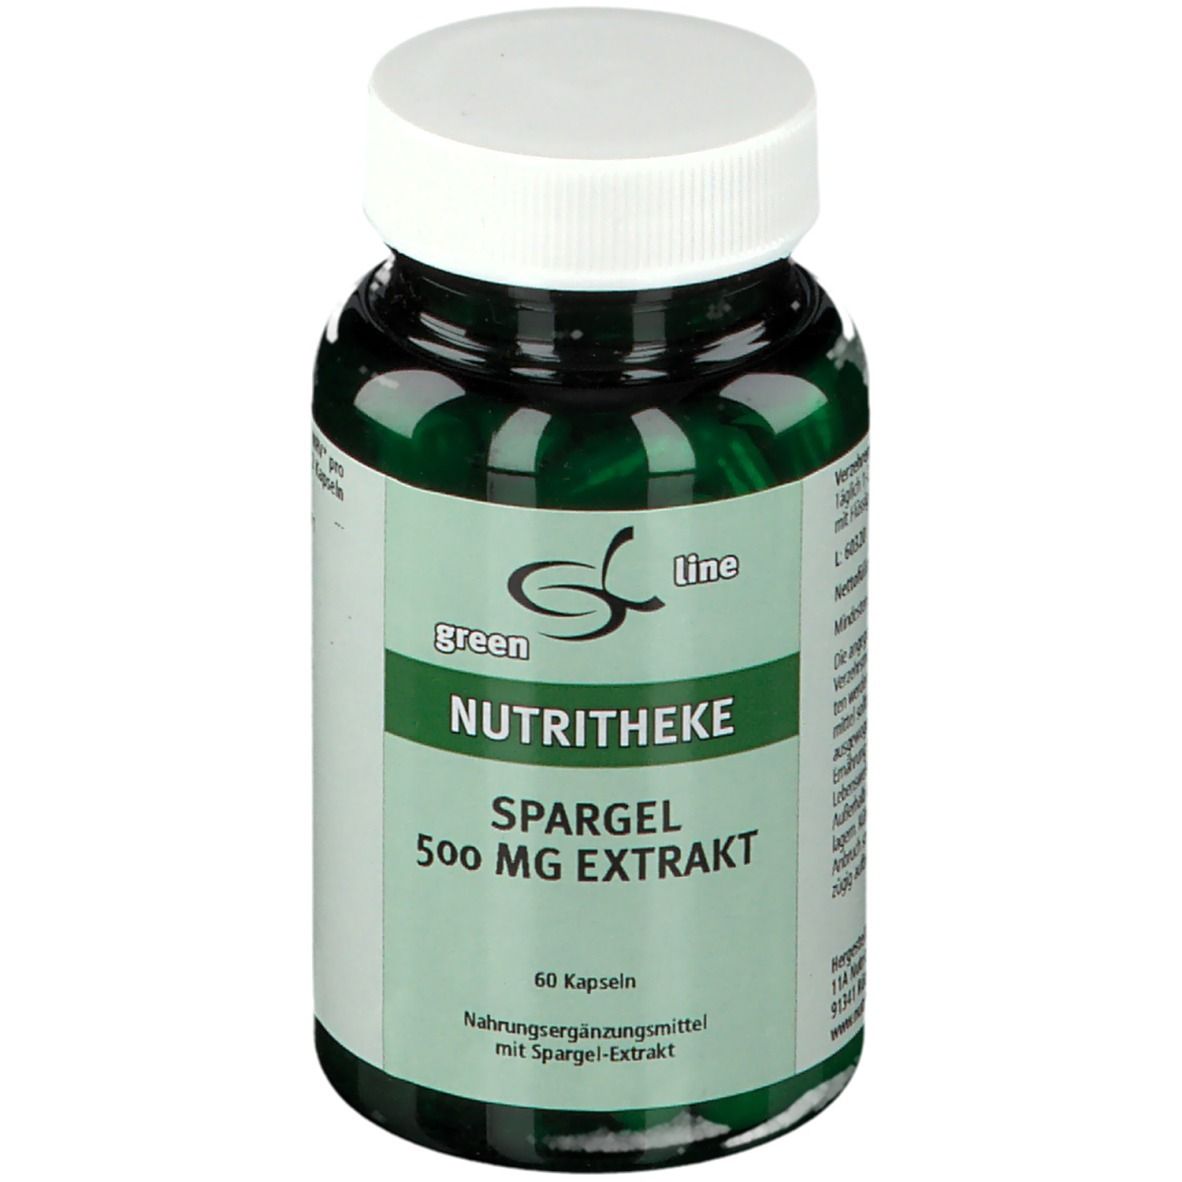 11 A Nutritheke GmbH green line Spargel 500 mg Extrakt